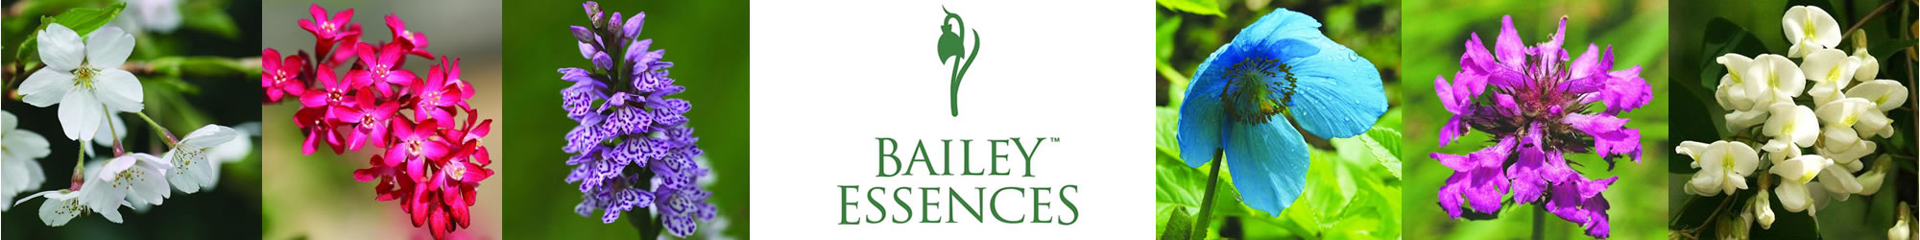 Bailey Flower Essences banner